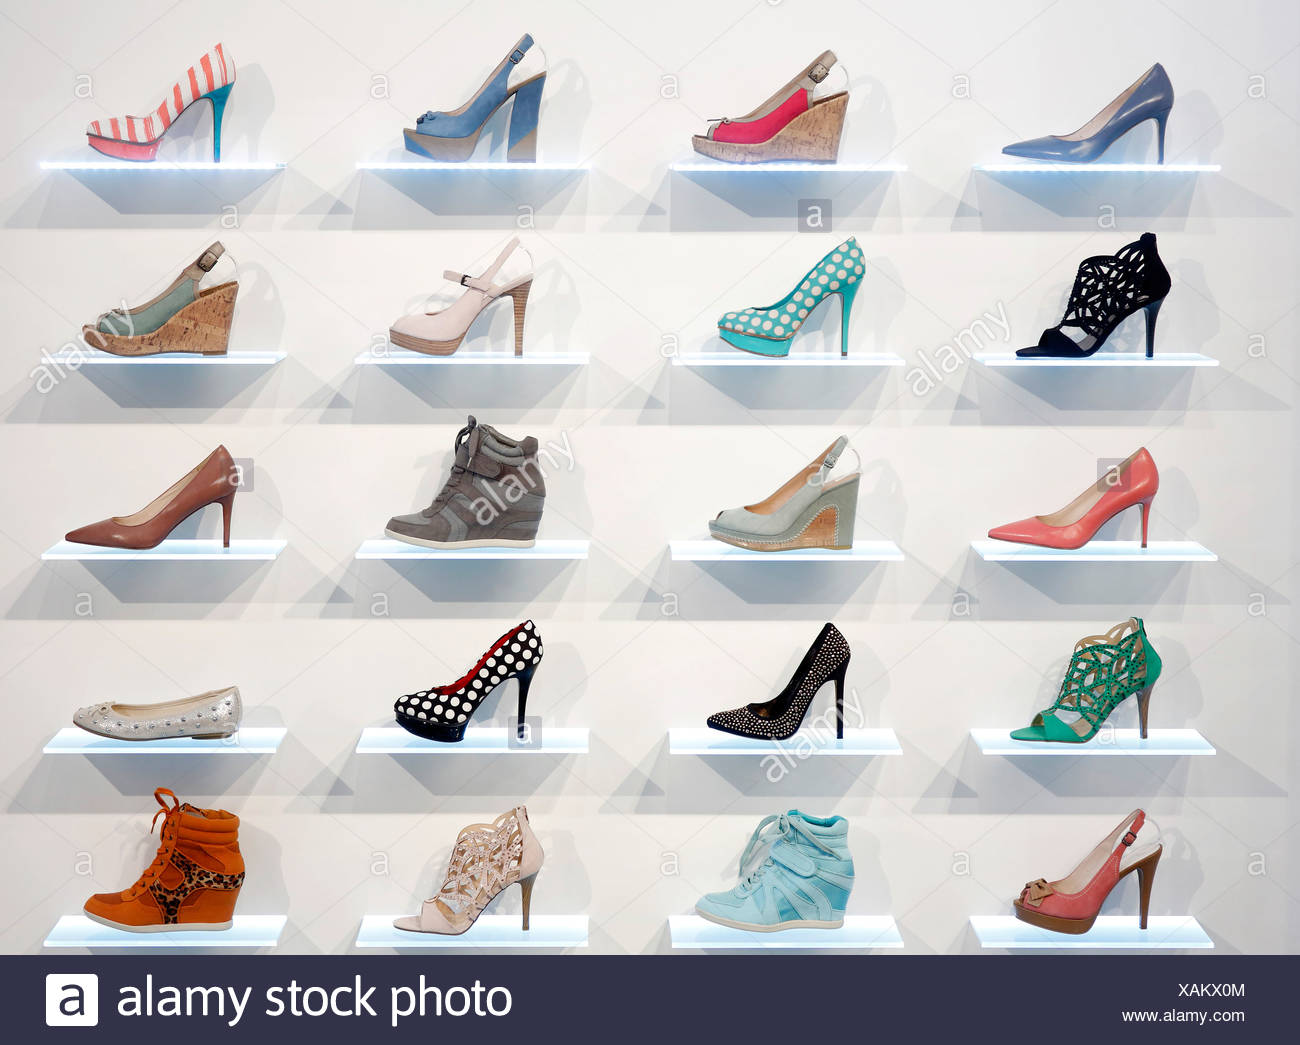 german shoe company deichmann